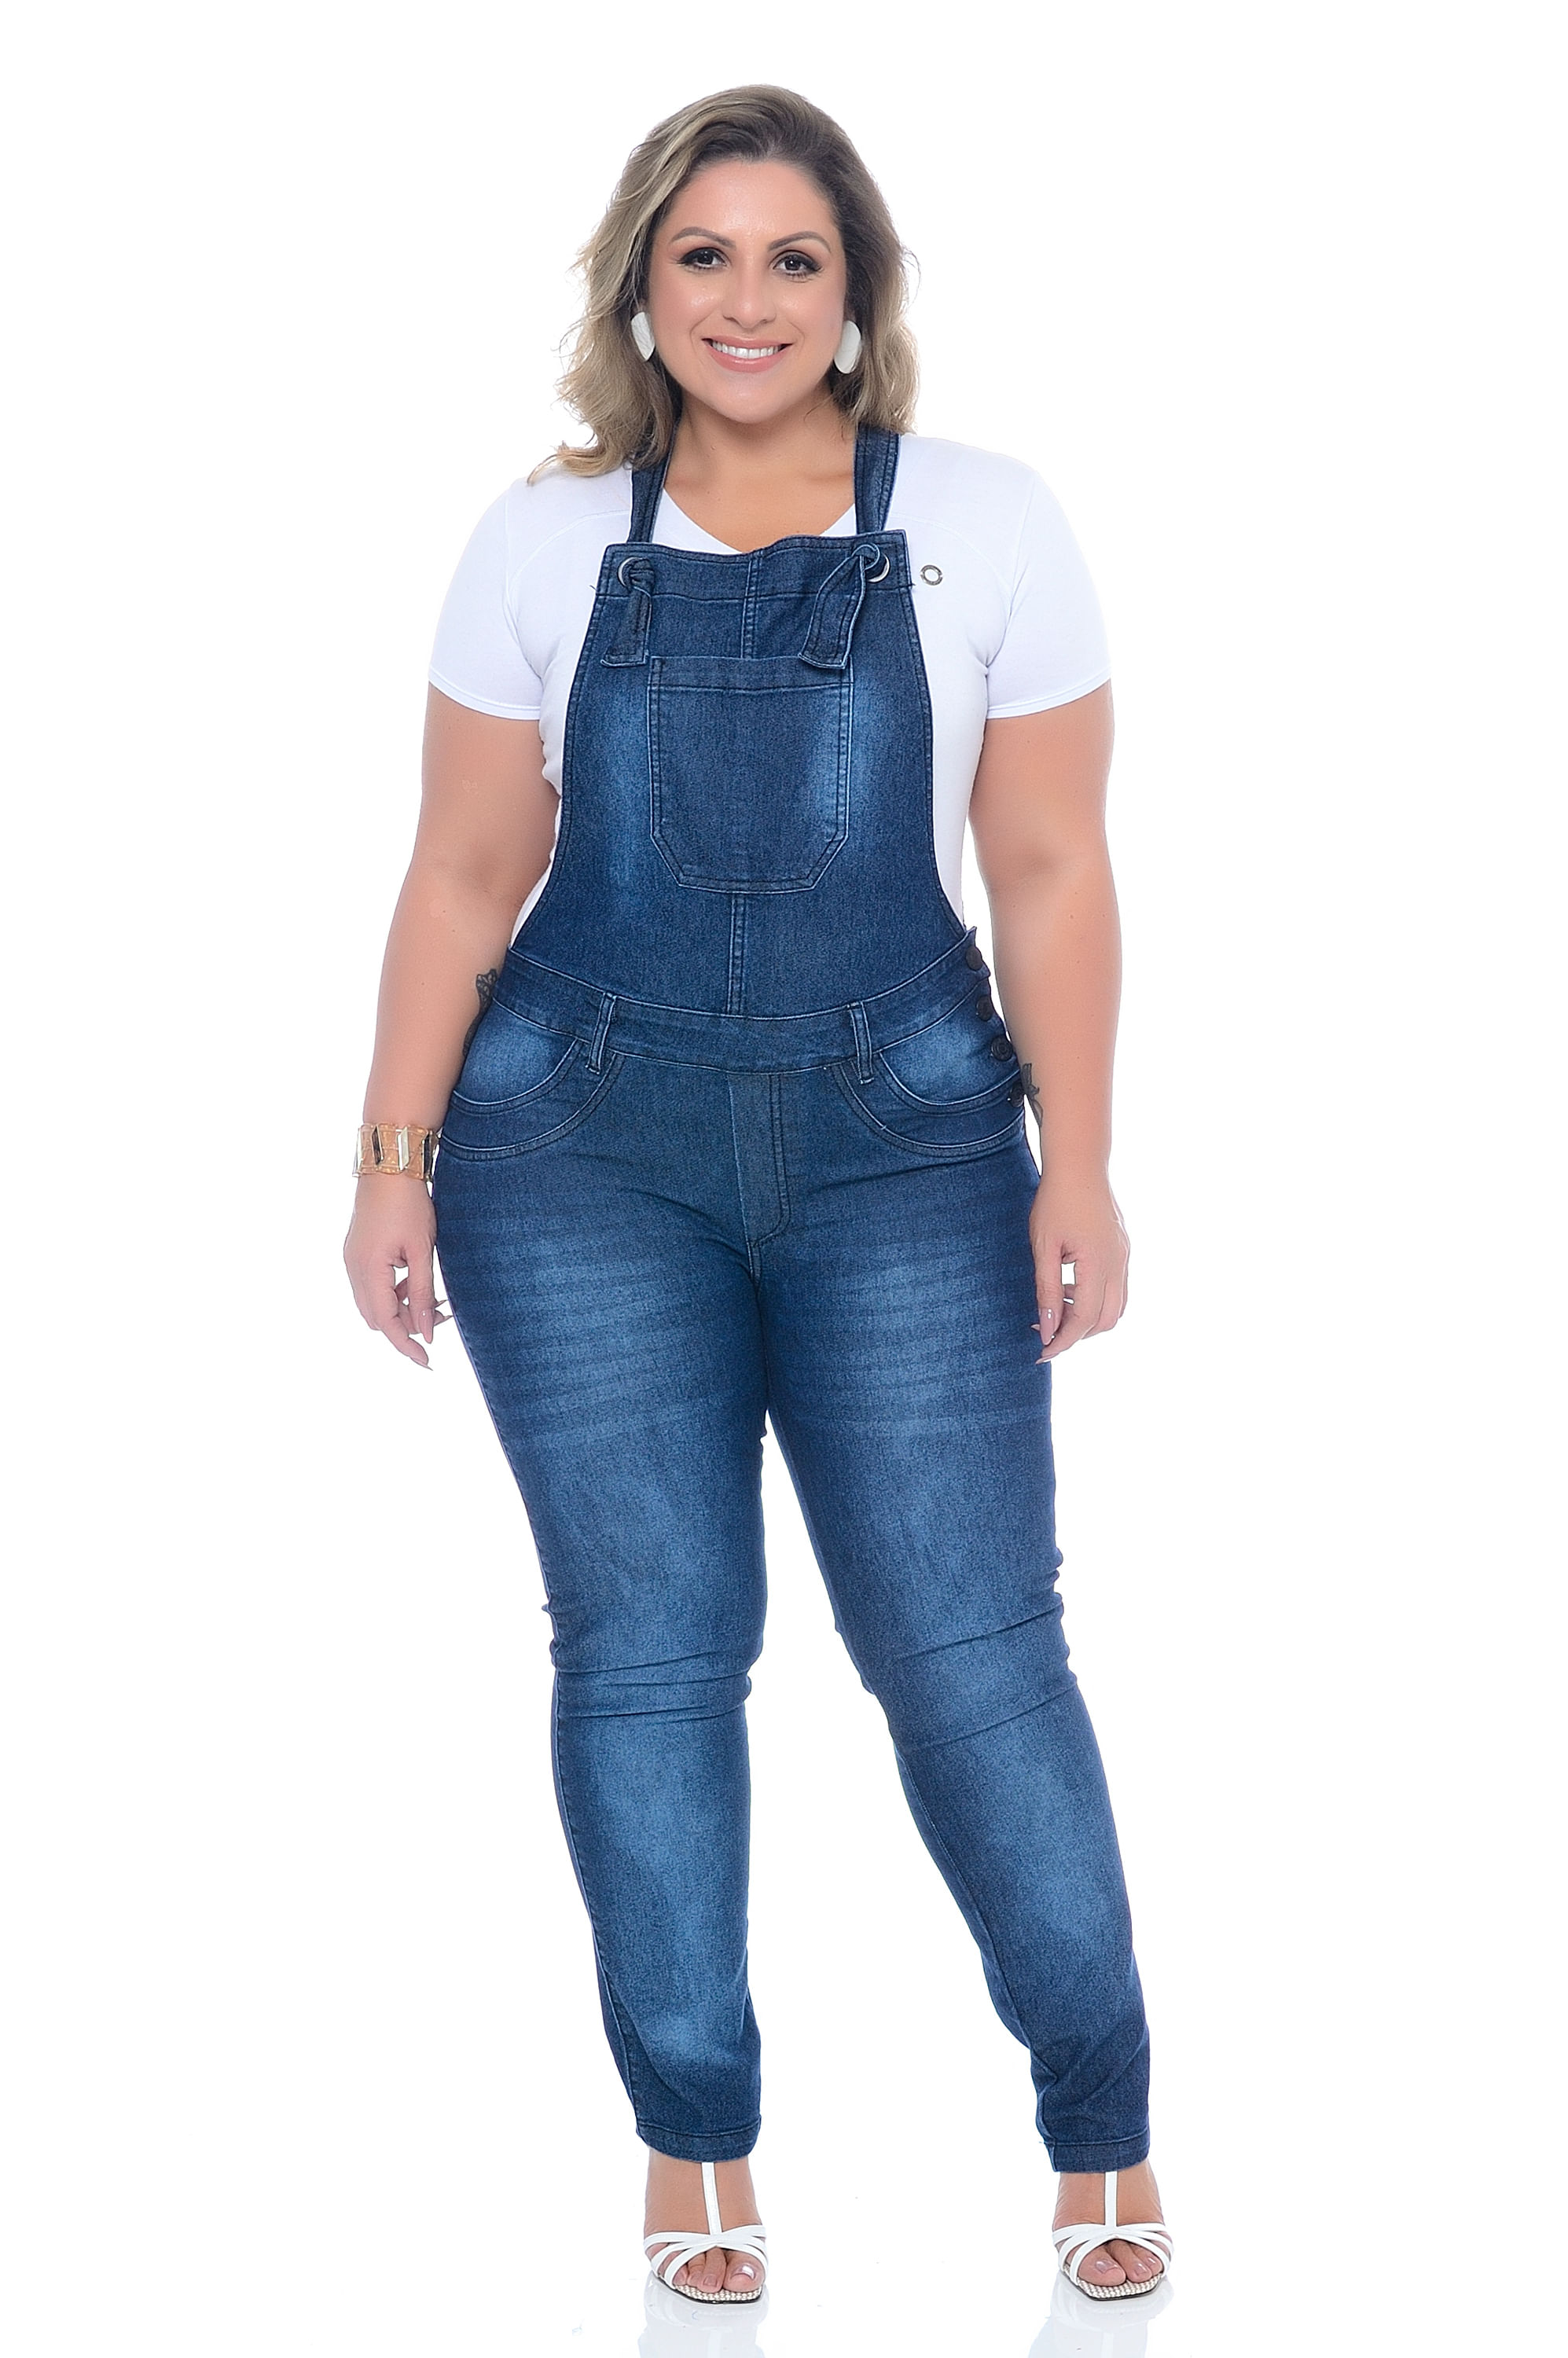 jardineira jeans sawary plus size feminina